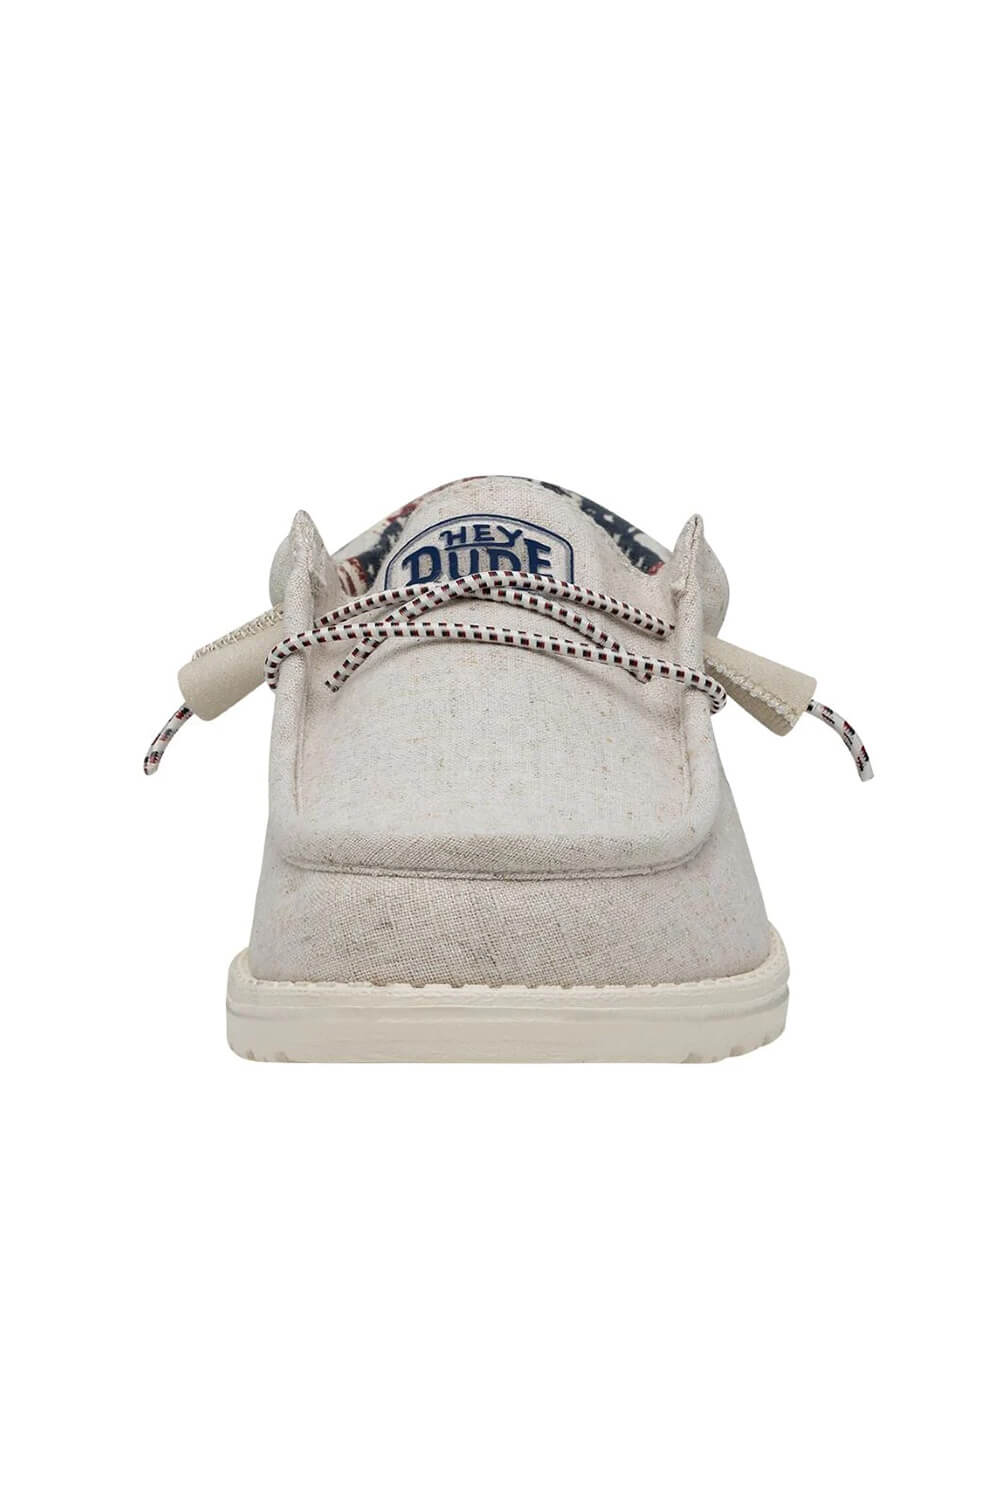 HEYDUDE Men’s Wally Patriotic Shoes in Off White Patriotic | 40001-1K1 ...